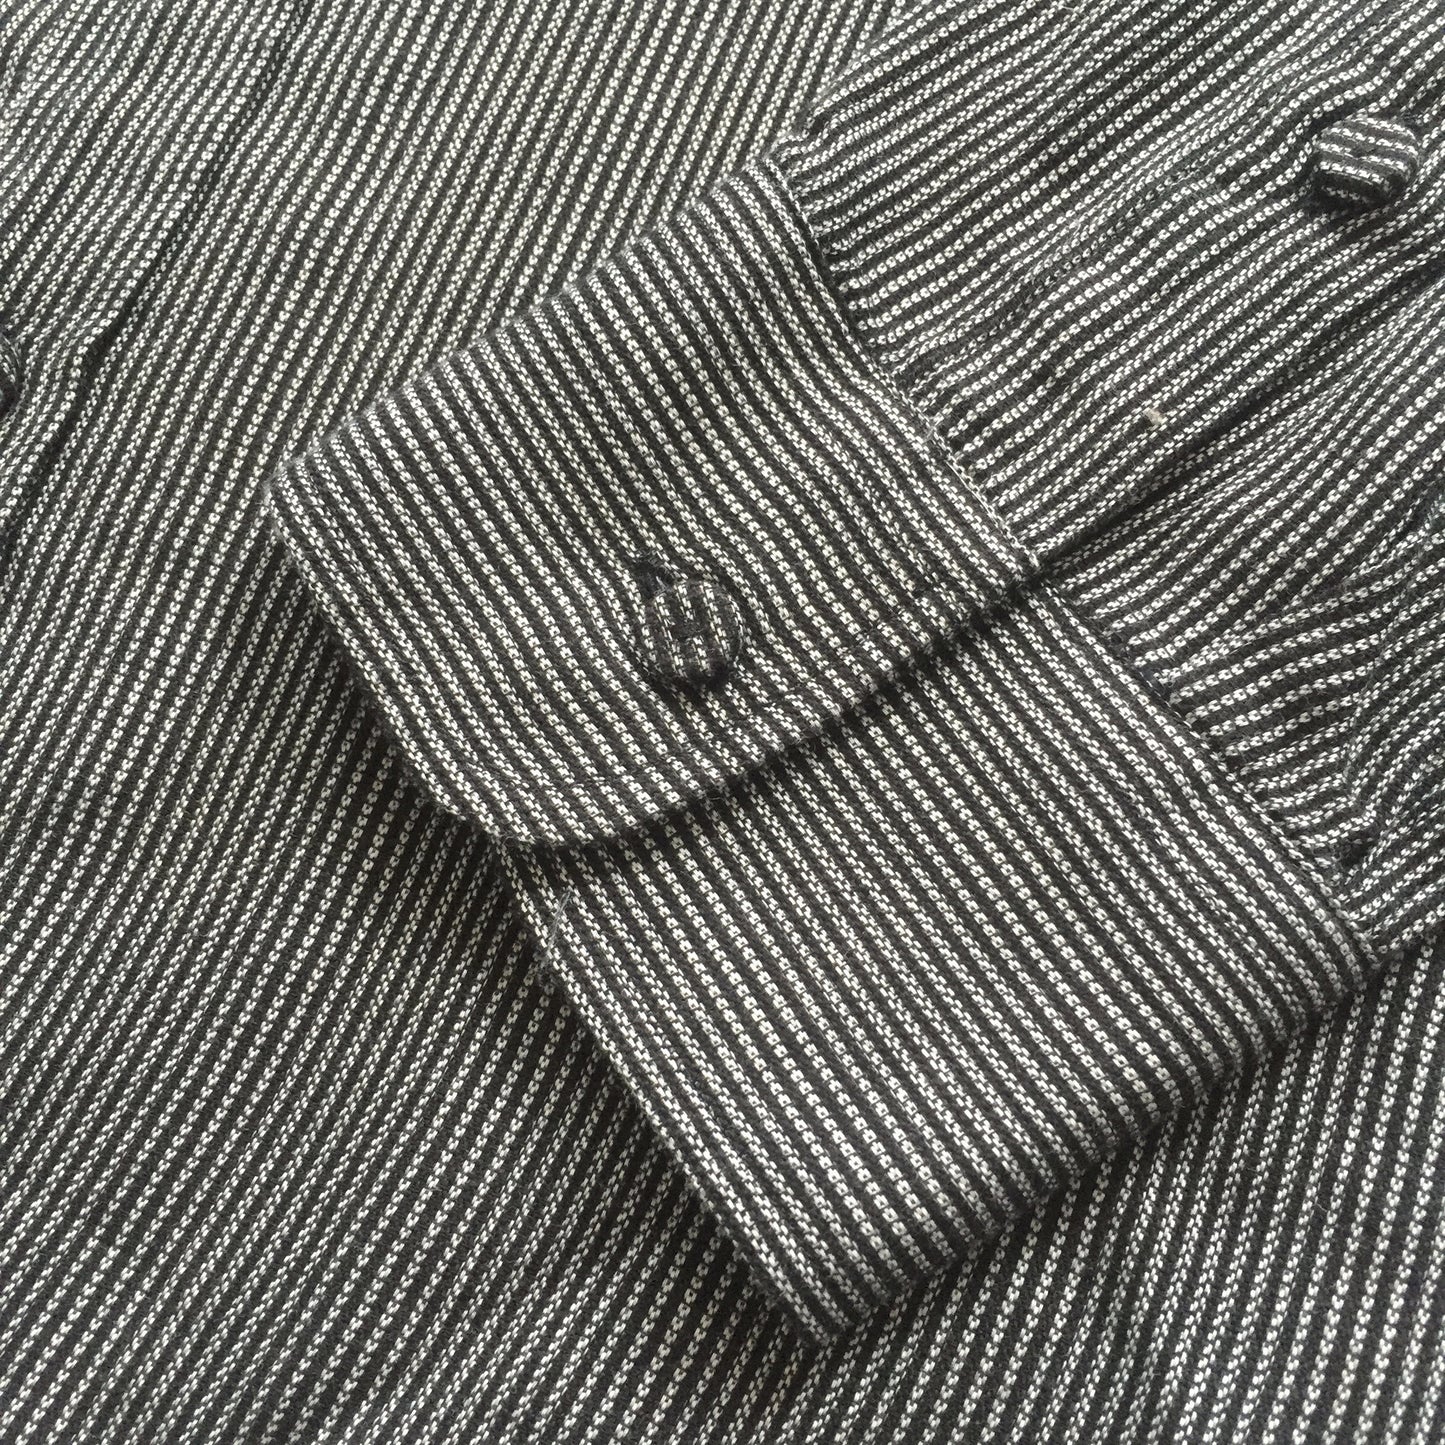 Dolce & Gabbana - Black & White Striped Shirt